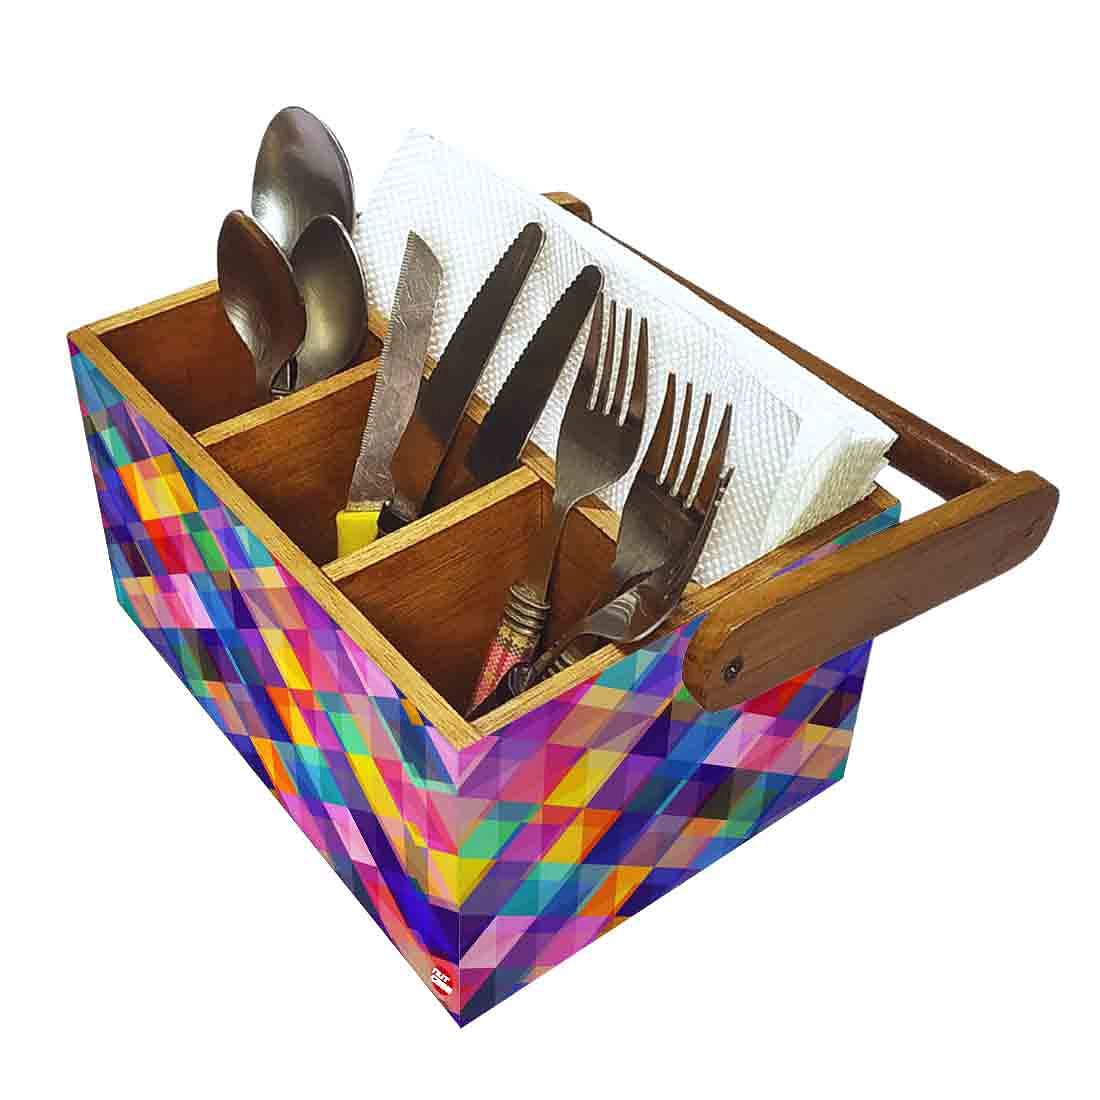 Spoon Holder Stand for Kitchen Organizer Knives & Forks - Multicolor Checks Nutcase